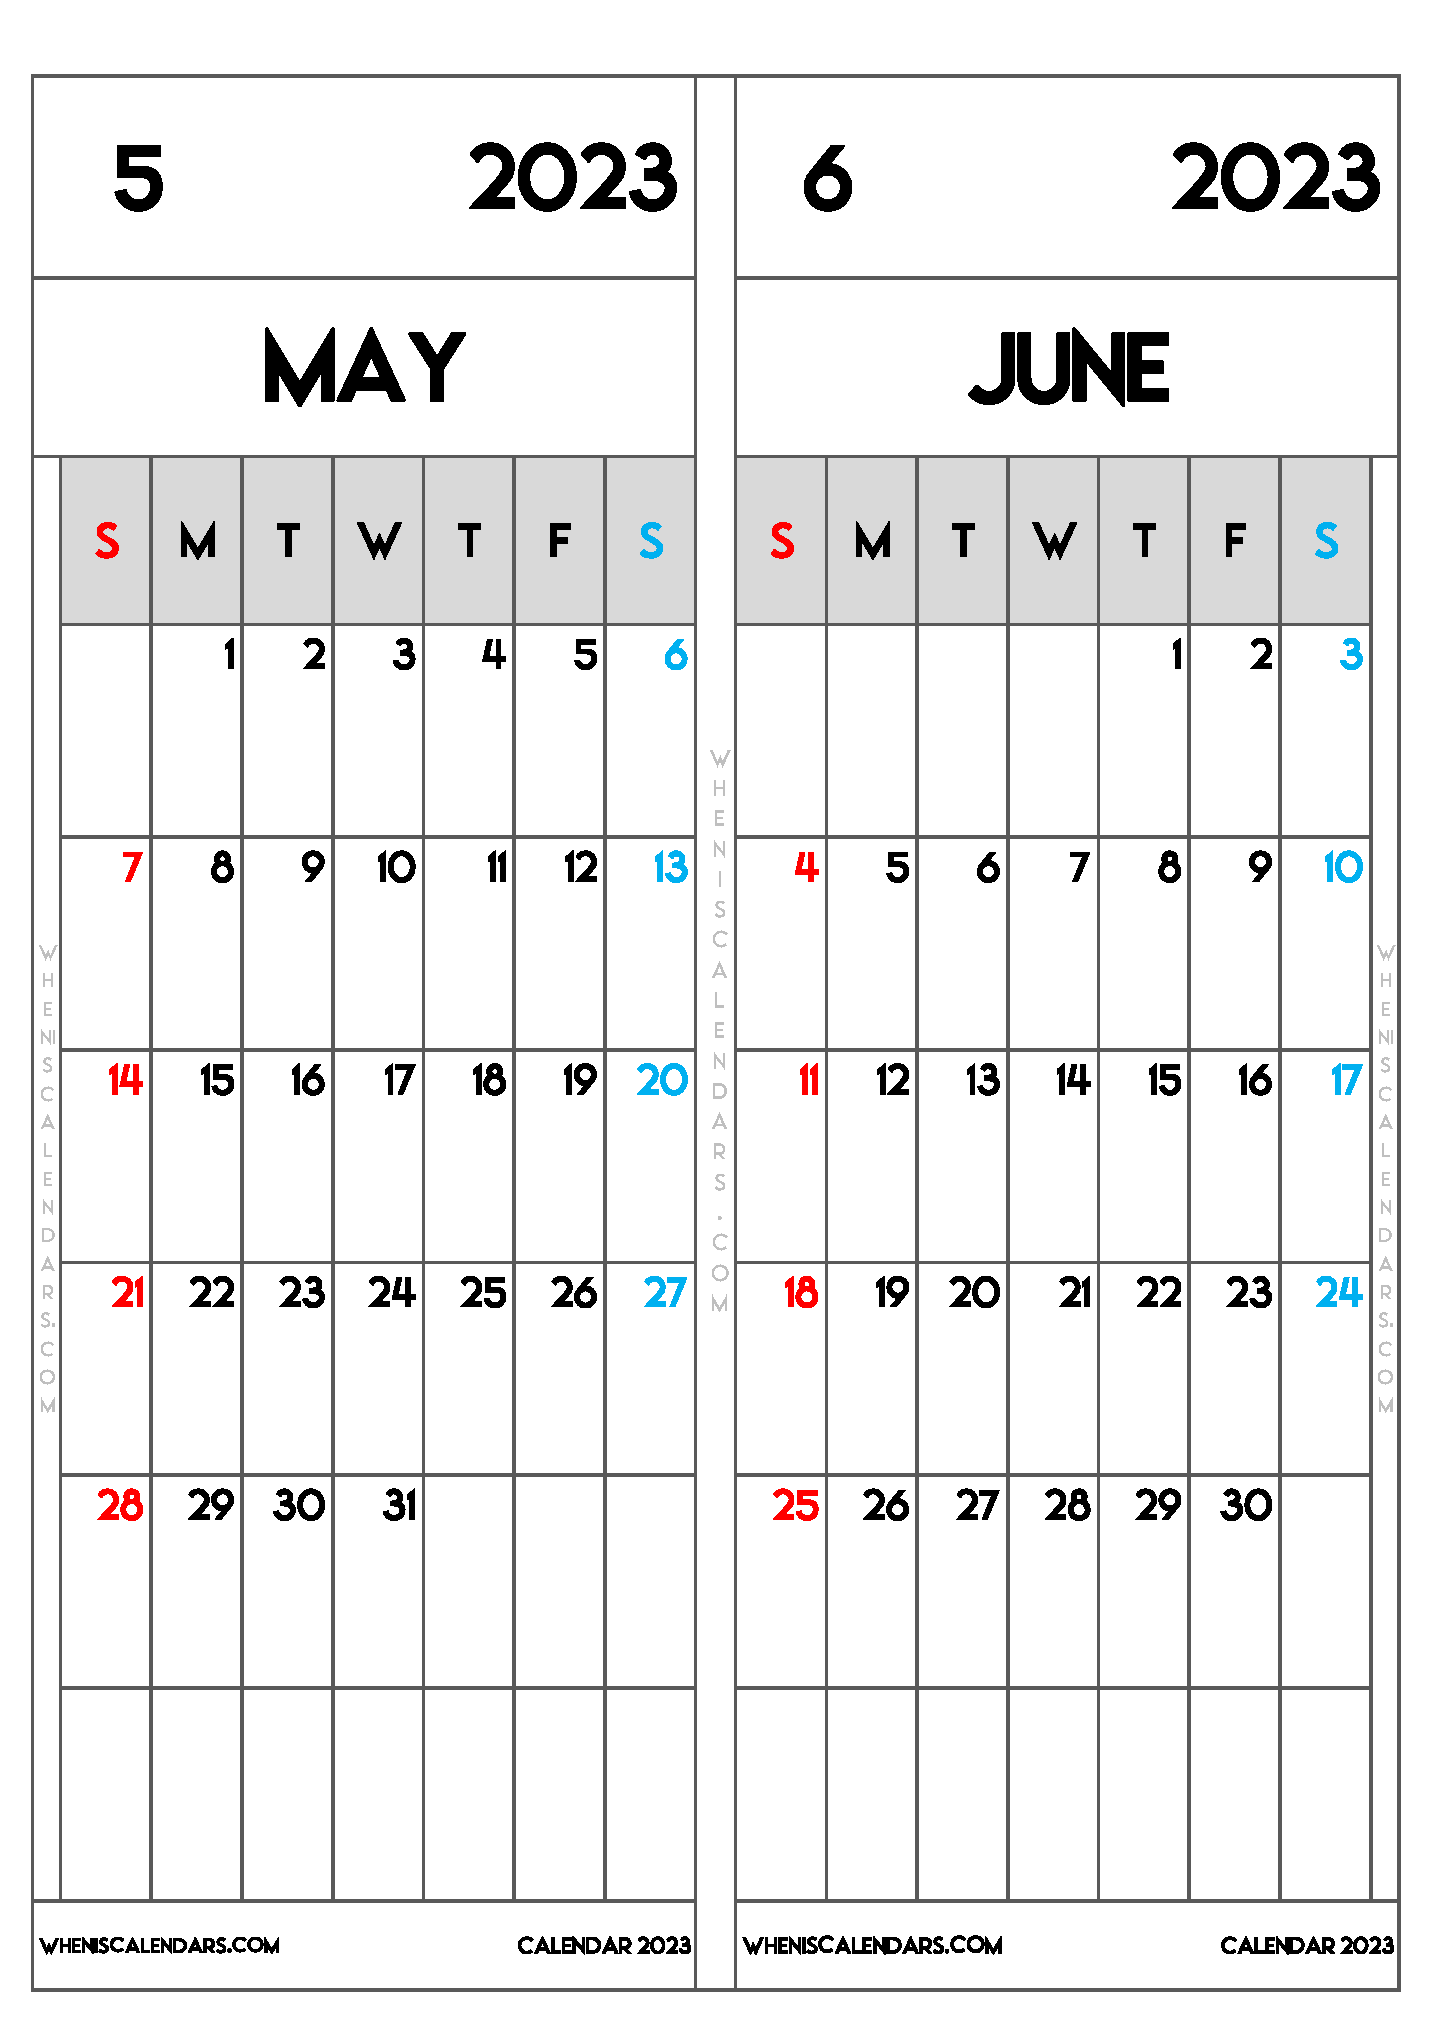 Download Free Printable May June 2023 Calendar as PDF and PNG Image